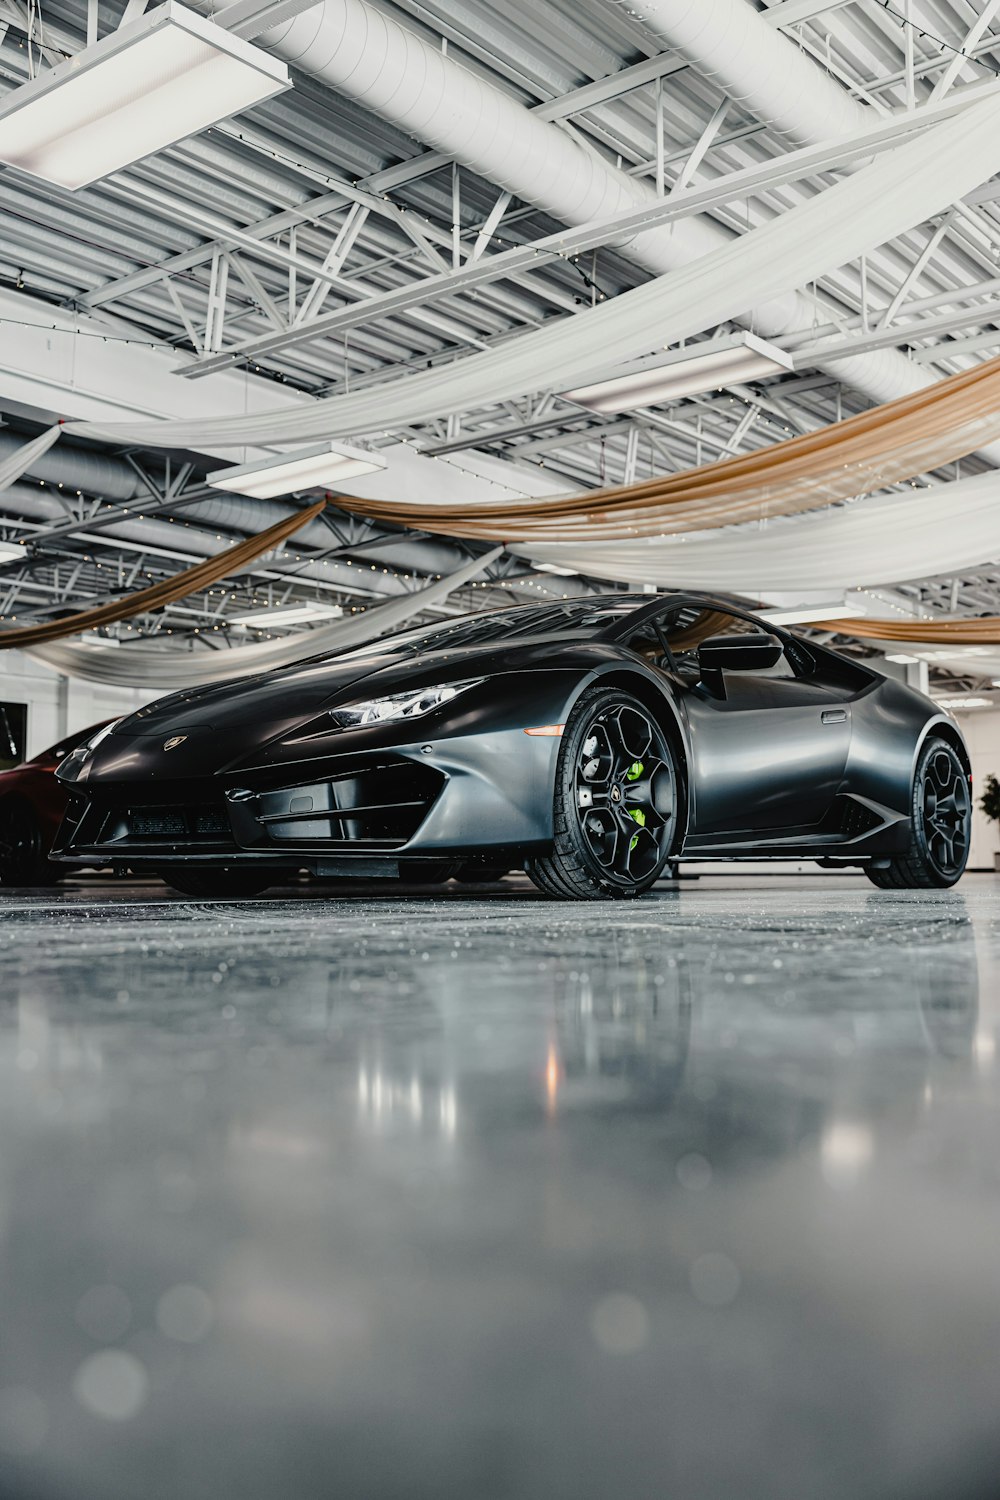 A black sports car parked in a garage photo – Free Machine Image on Unsplash